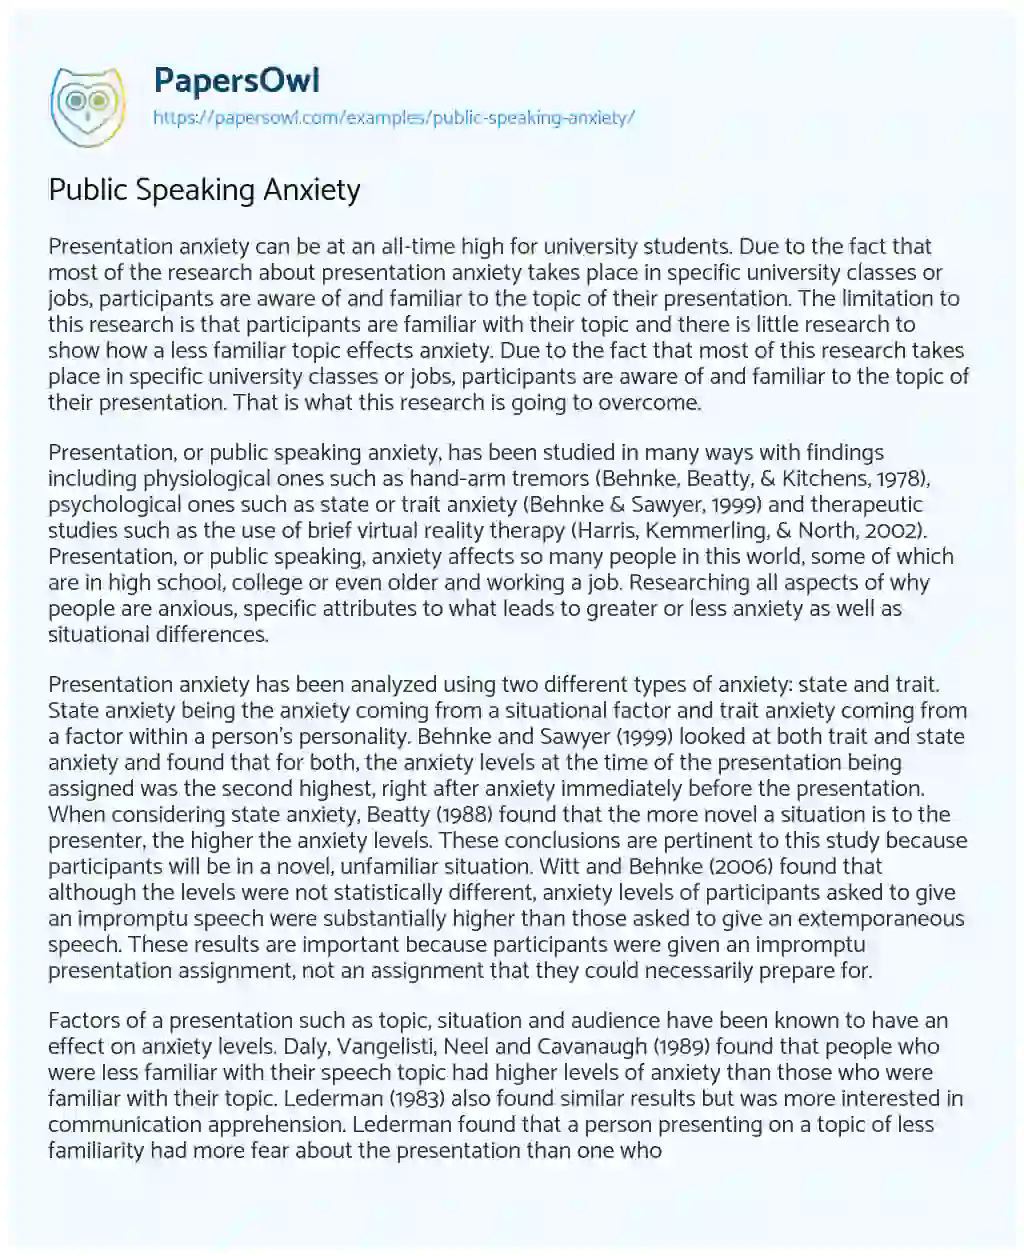 Essay on Public Speaking Anxiety